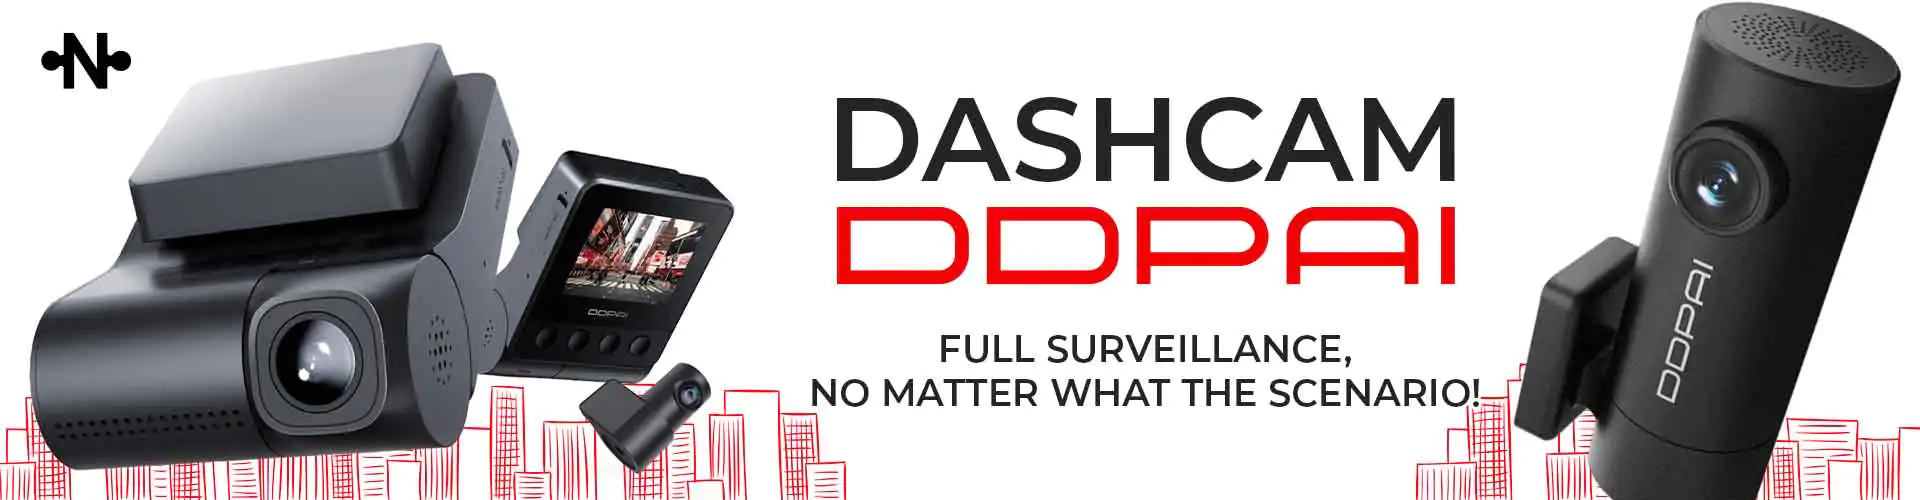 Dashcam DDPAI full surveillance, no matter what the scenario!